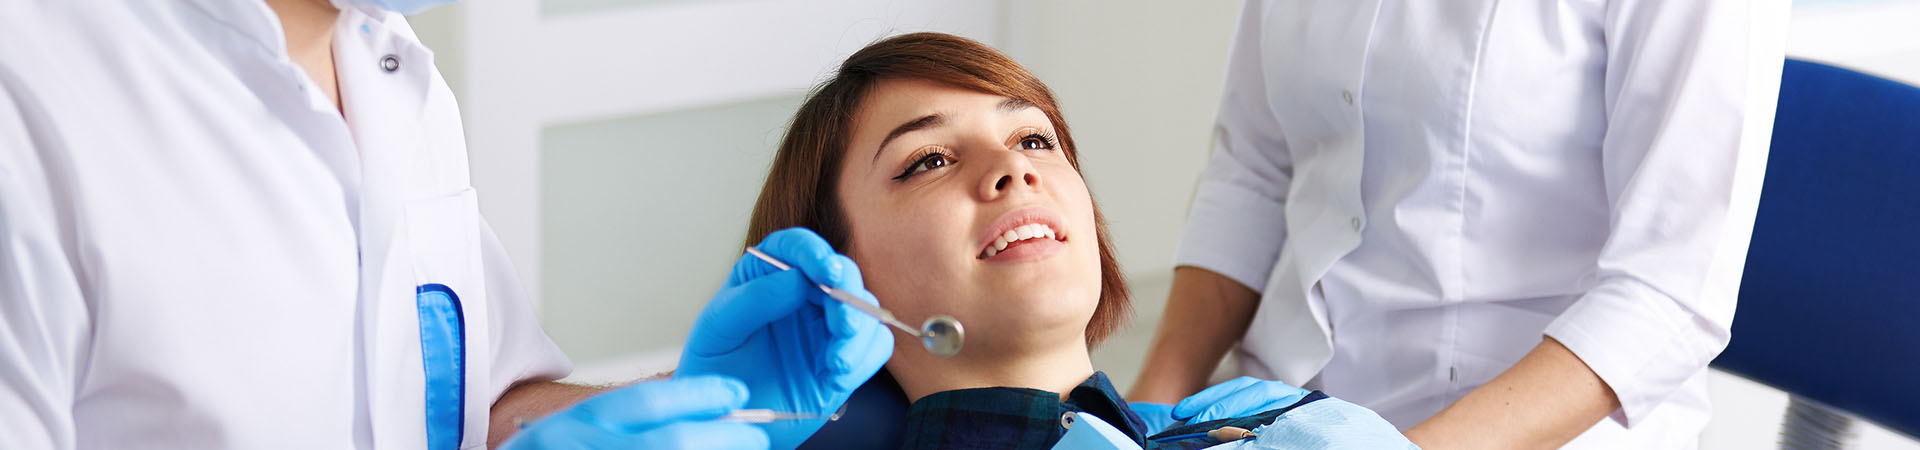 general dentistry - common procedure